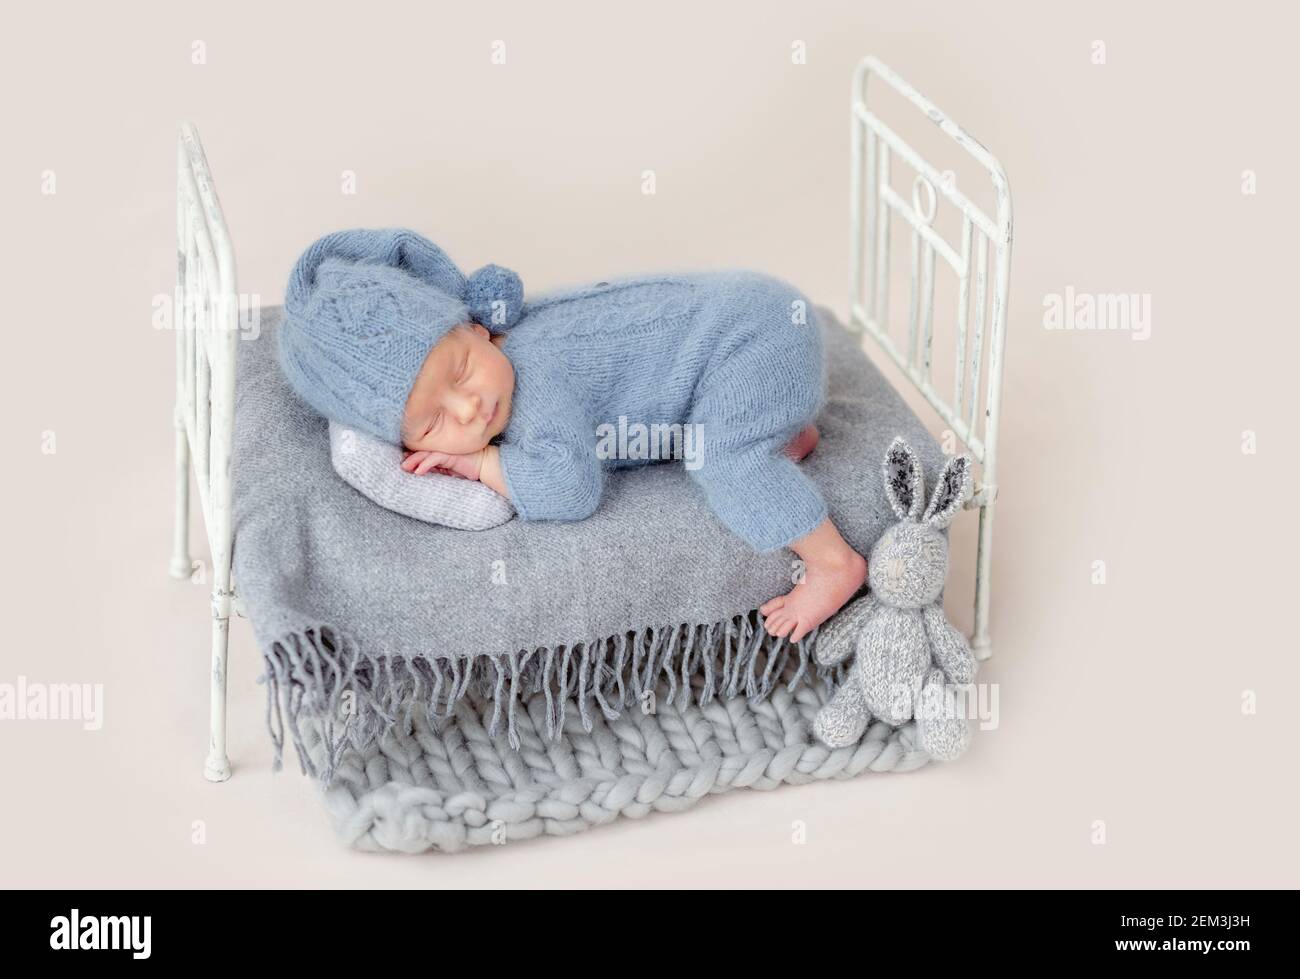 Sleeping newborn baby photoshoot Stock Photo - Alamy